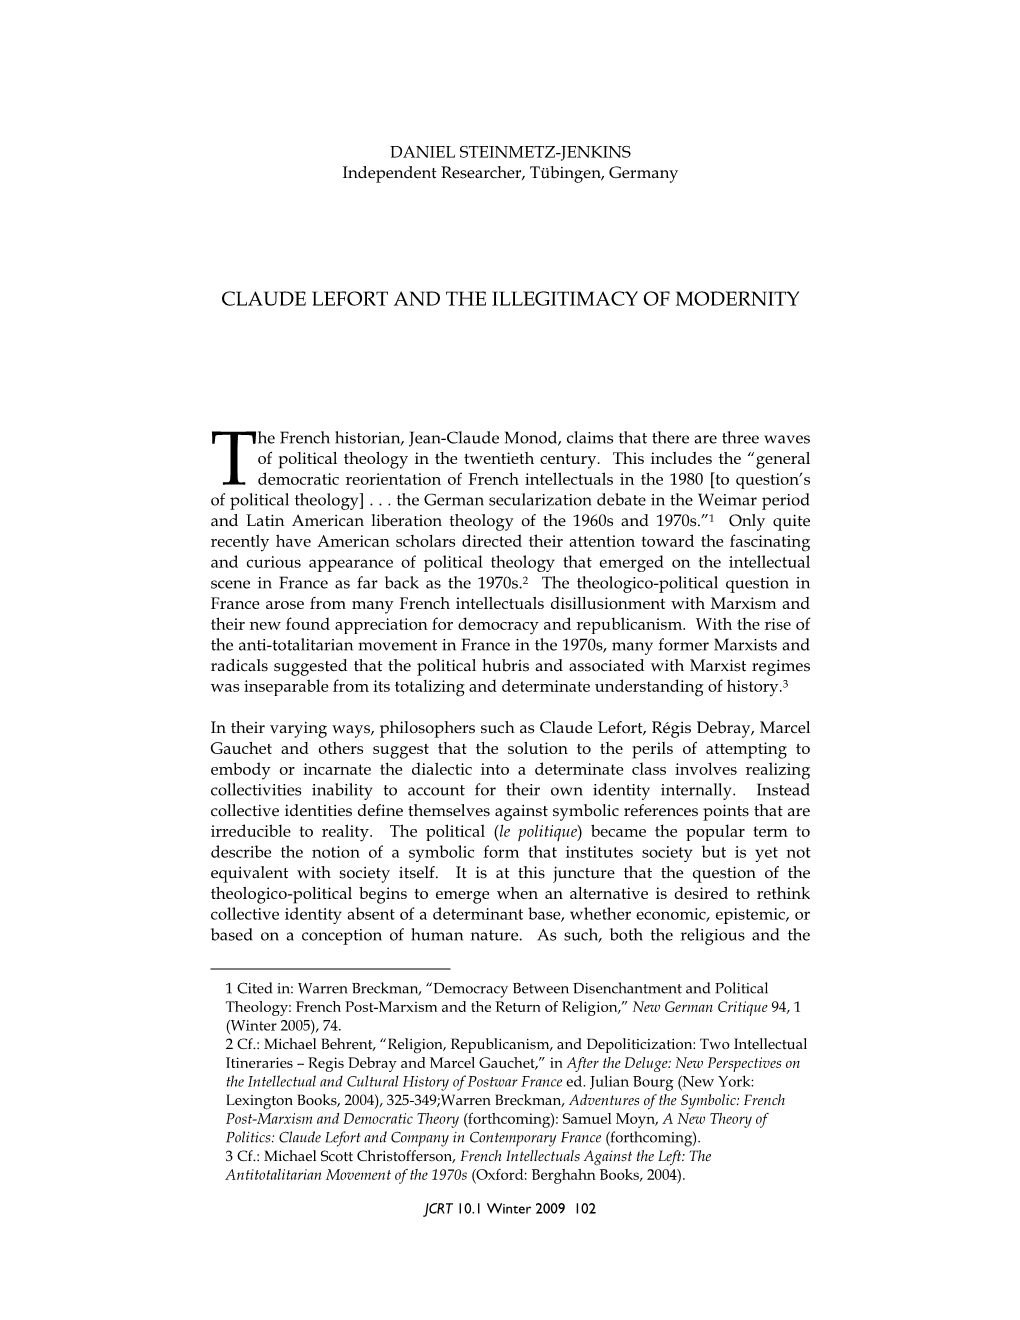 Claude Lefort and the Illegitimacy of Modernity